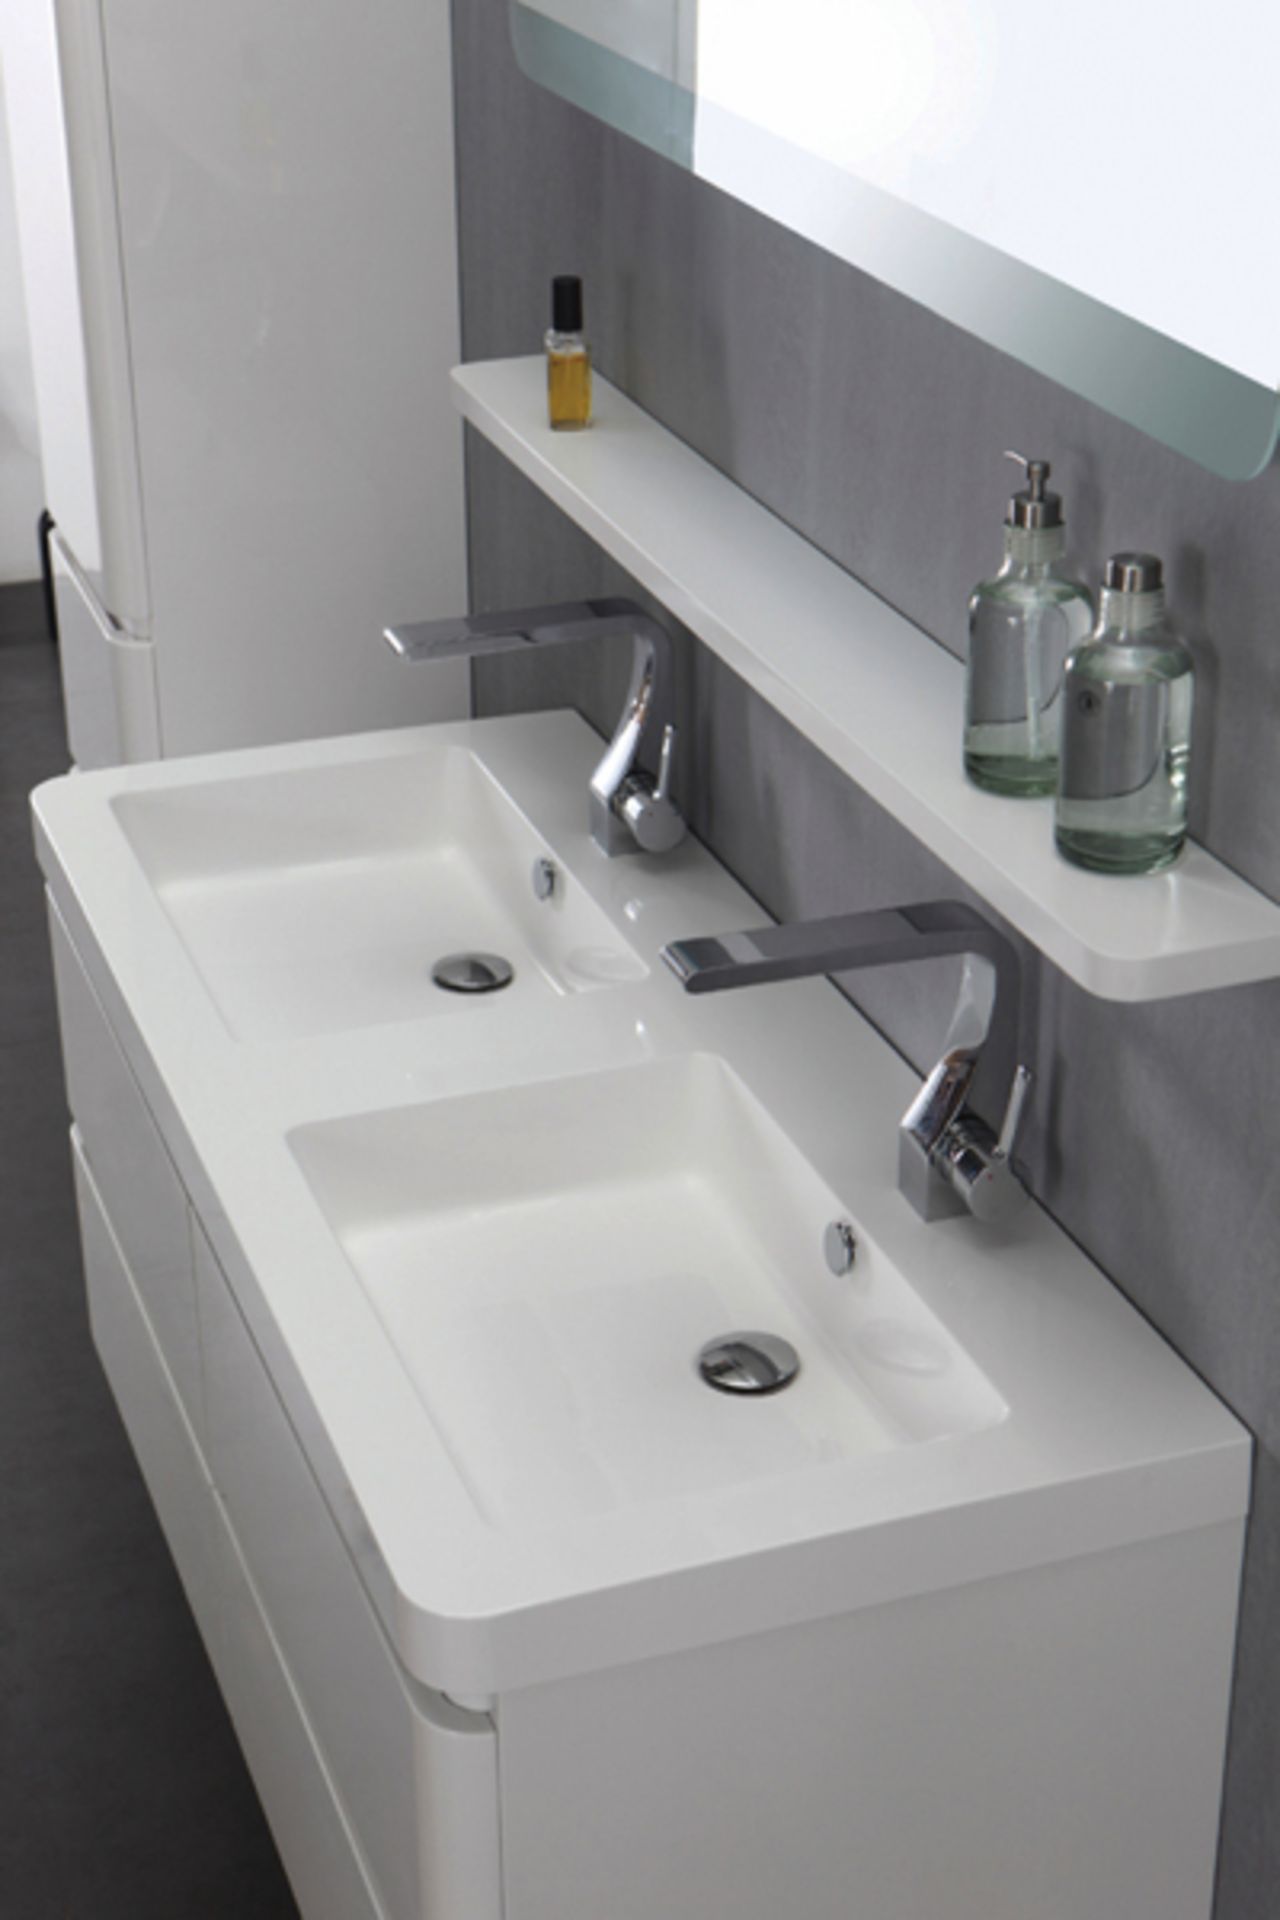 1 x Austin Bathrooms URBAN 1000 Wall Mounted Bathroom Vanity Unit With MarbleTECH Basin - RRP £890 - Image 4 of 6